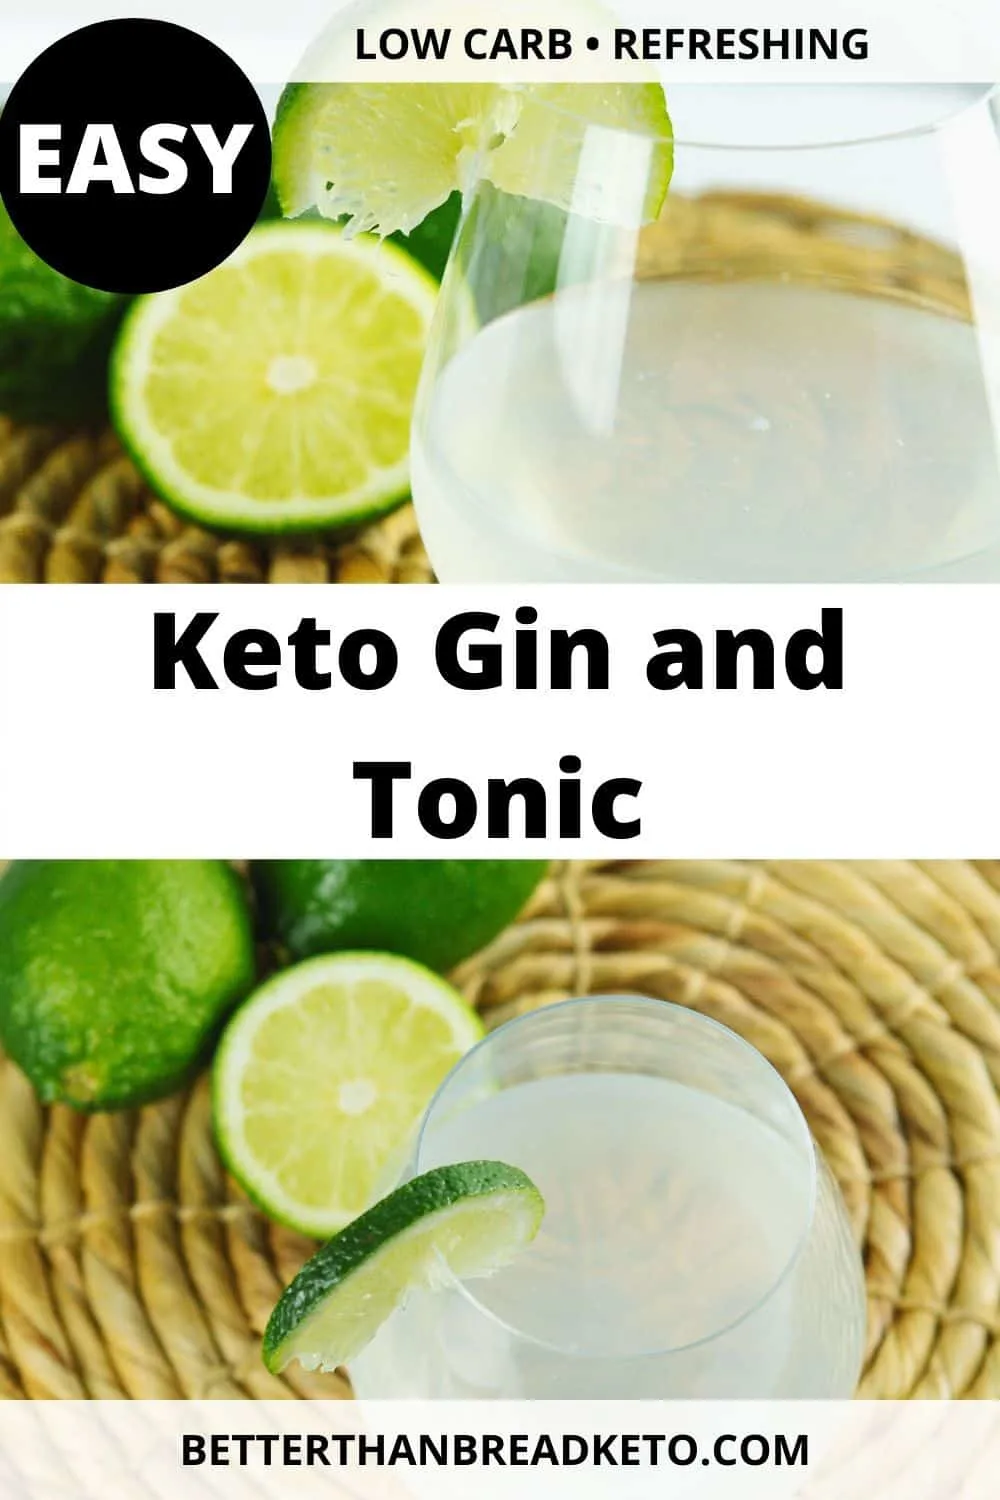 Keto Gin and Tonic